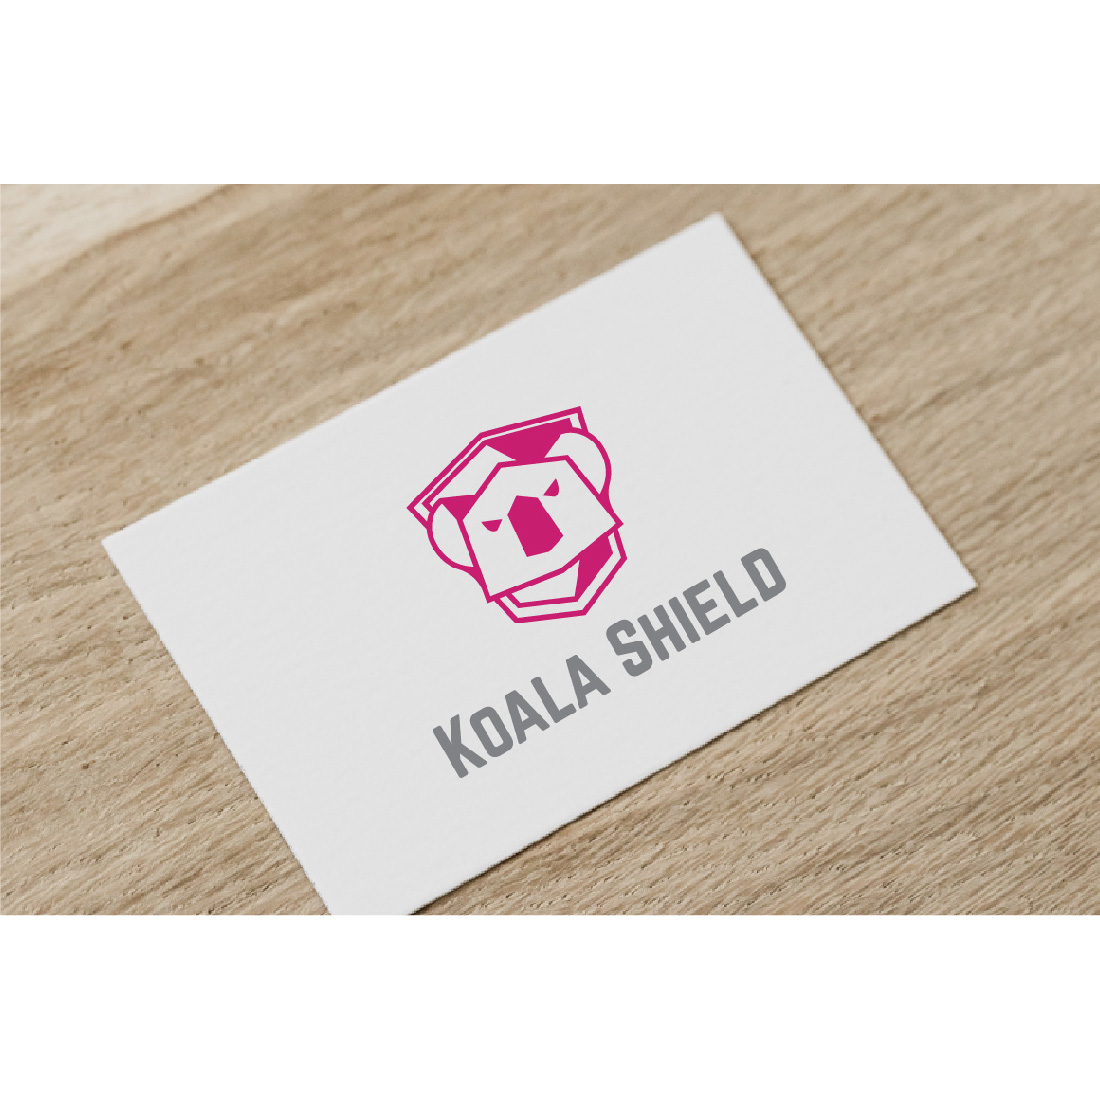 Koala Shield Marsupial Animal Game Business Nature Protection Logo cover.